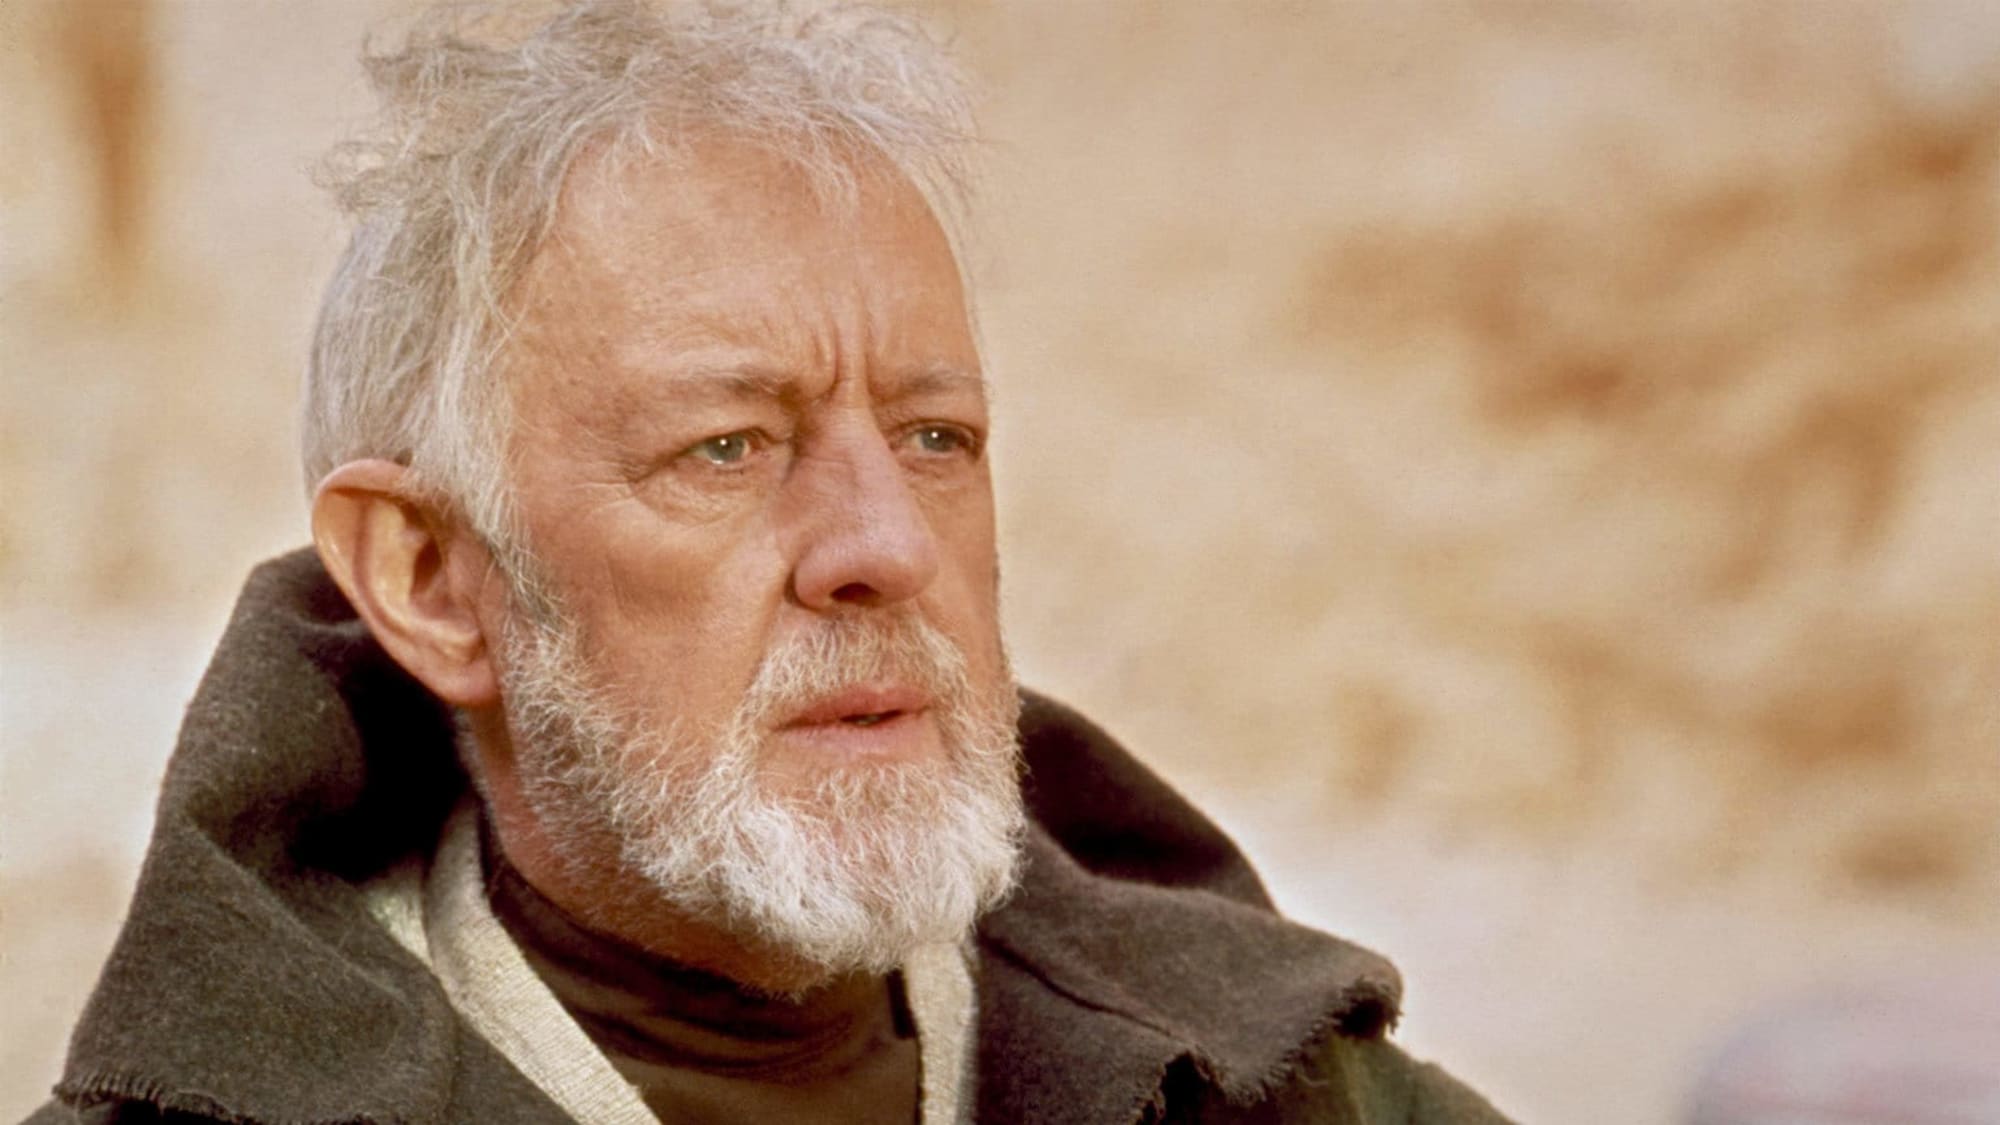 Who portrayed Obi-Wan Kenobi in Star Wars?